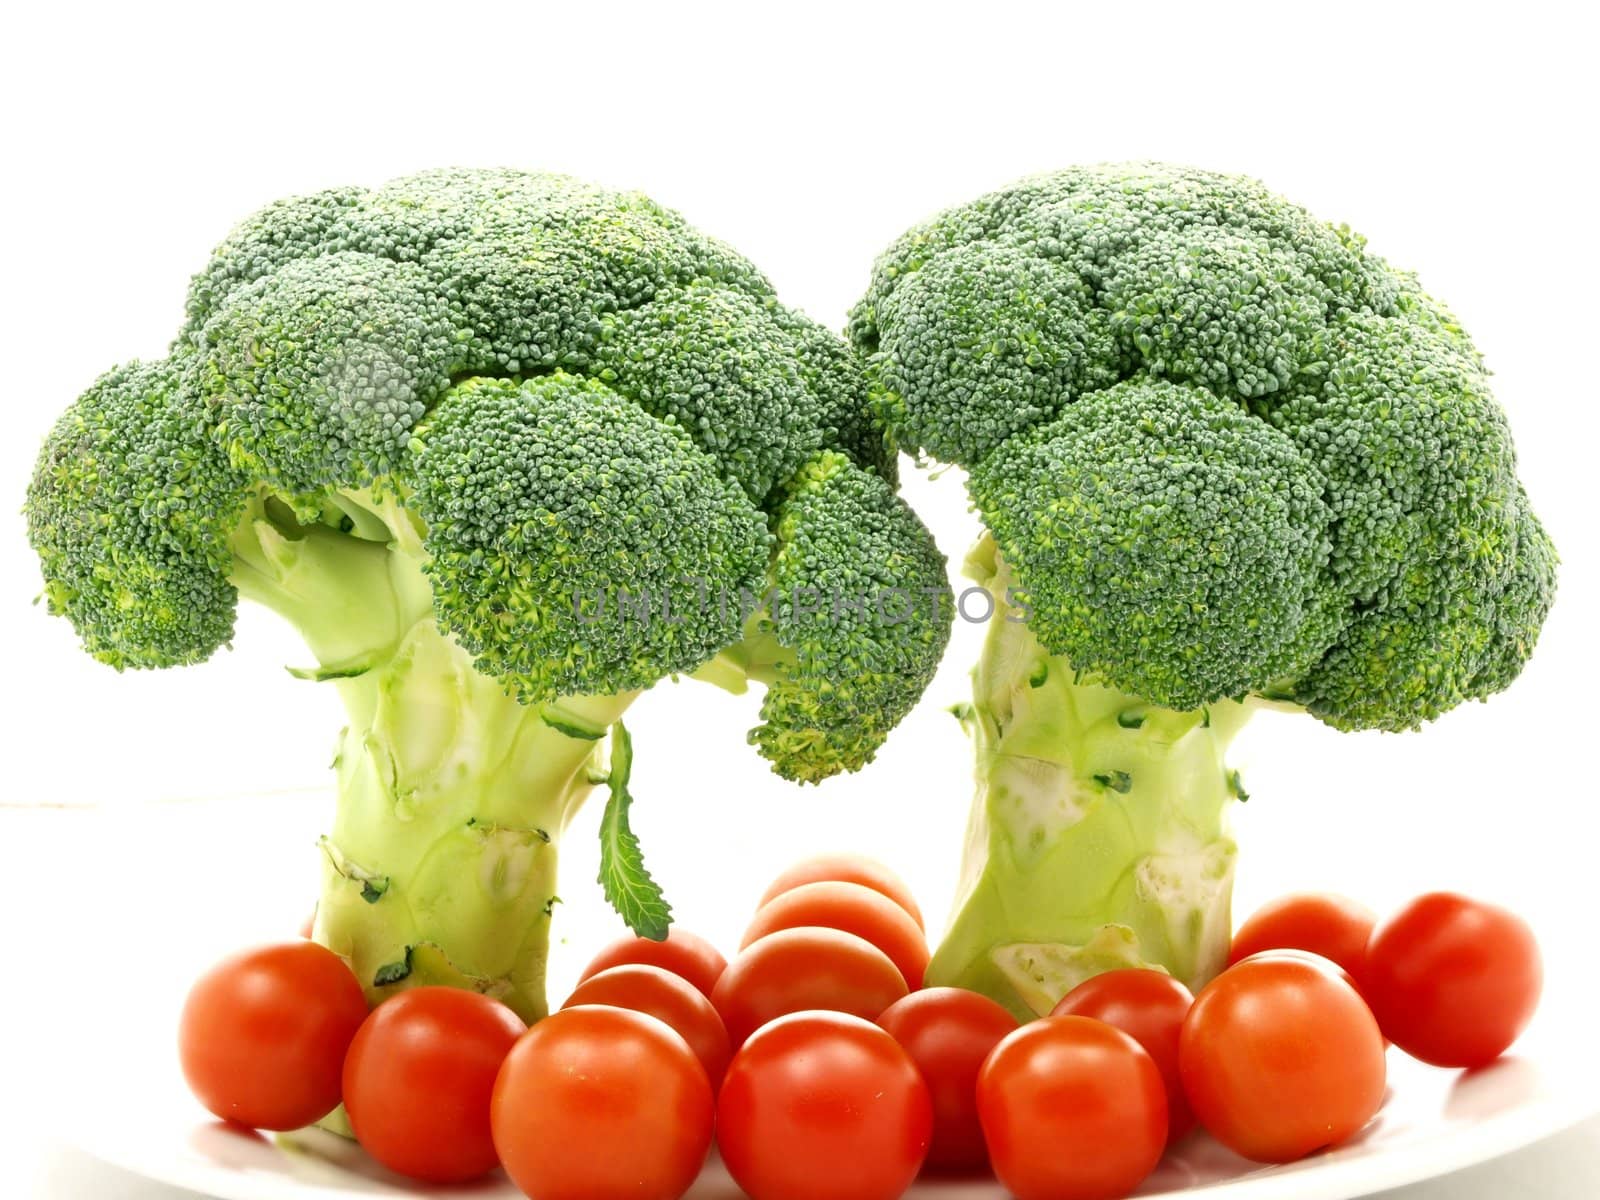 Broccoli and tomato isolated towards white